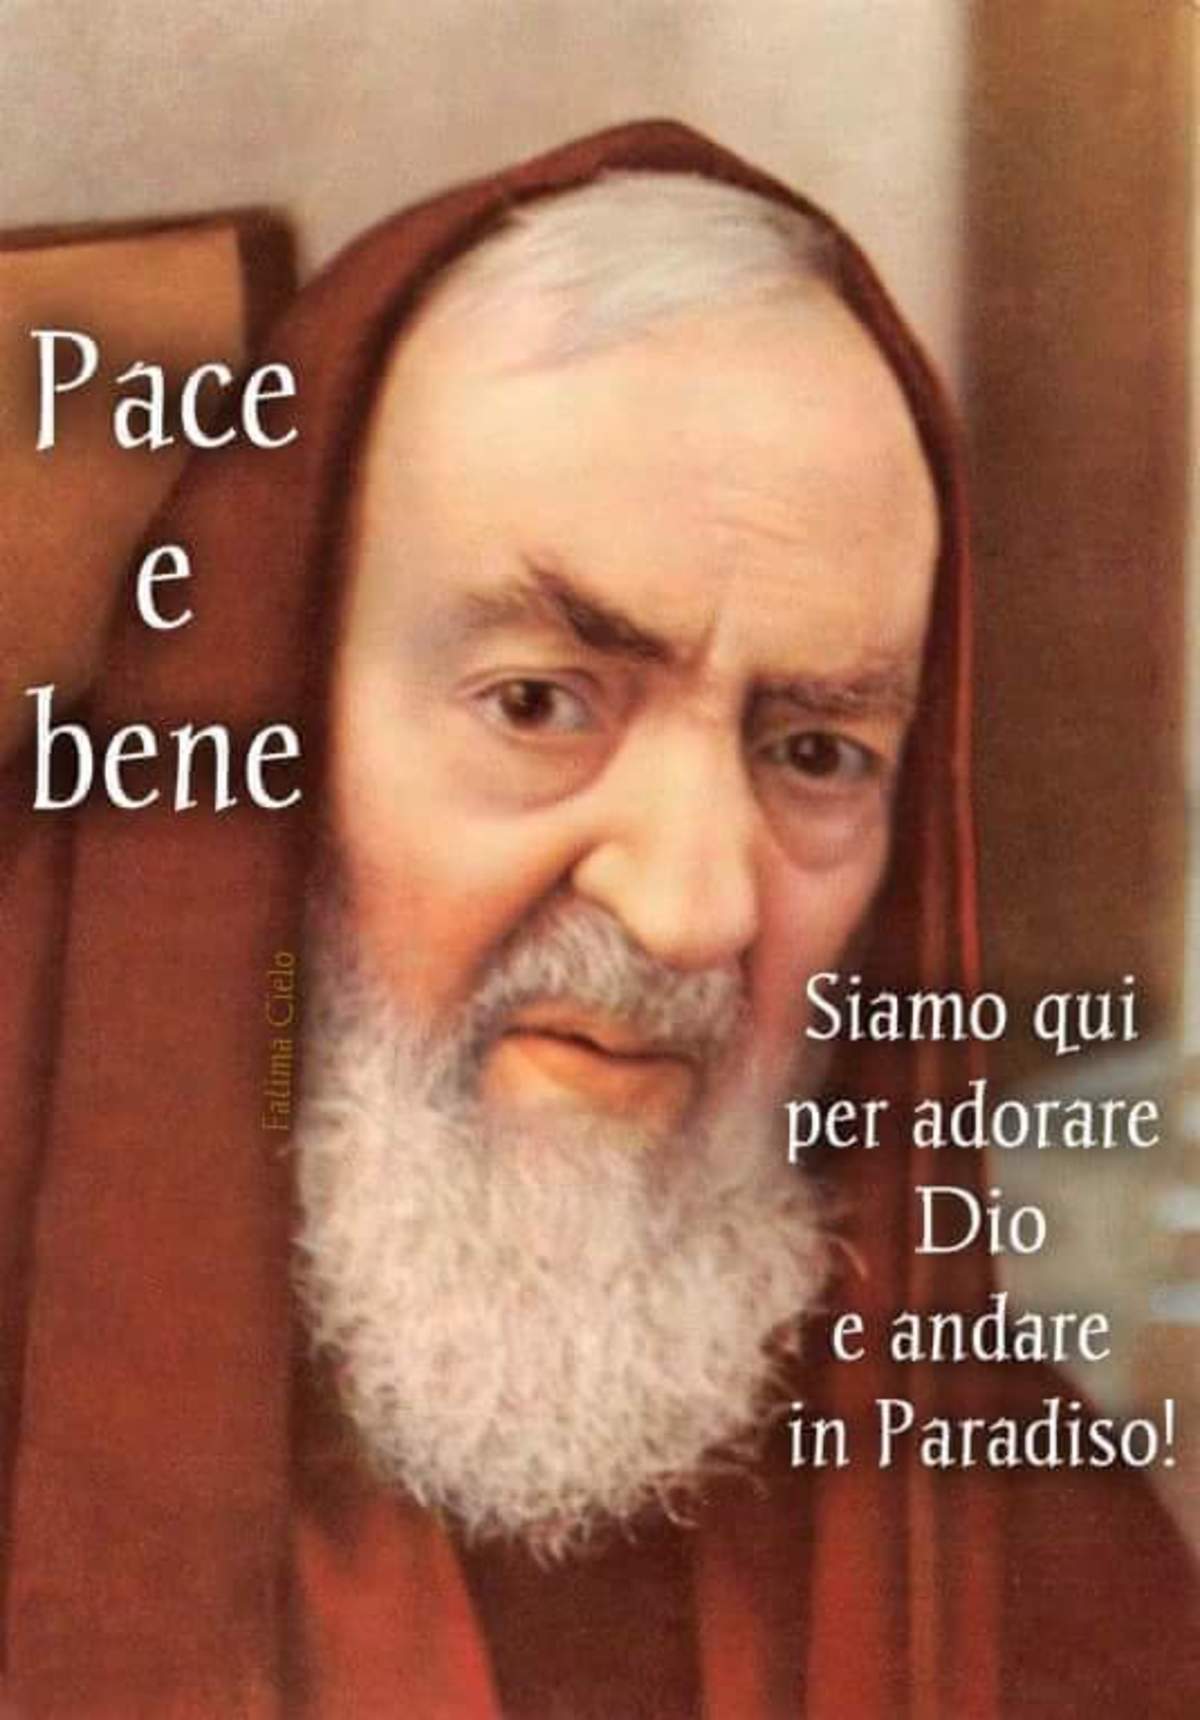 Padre Pio immagini sacre 6150